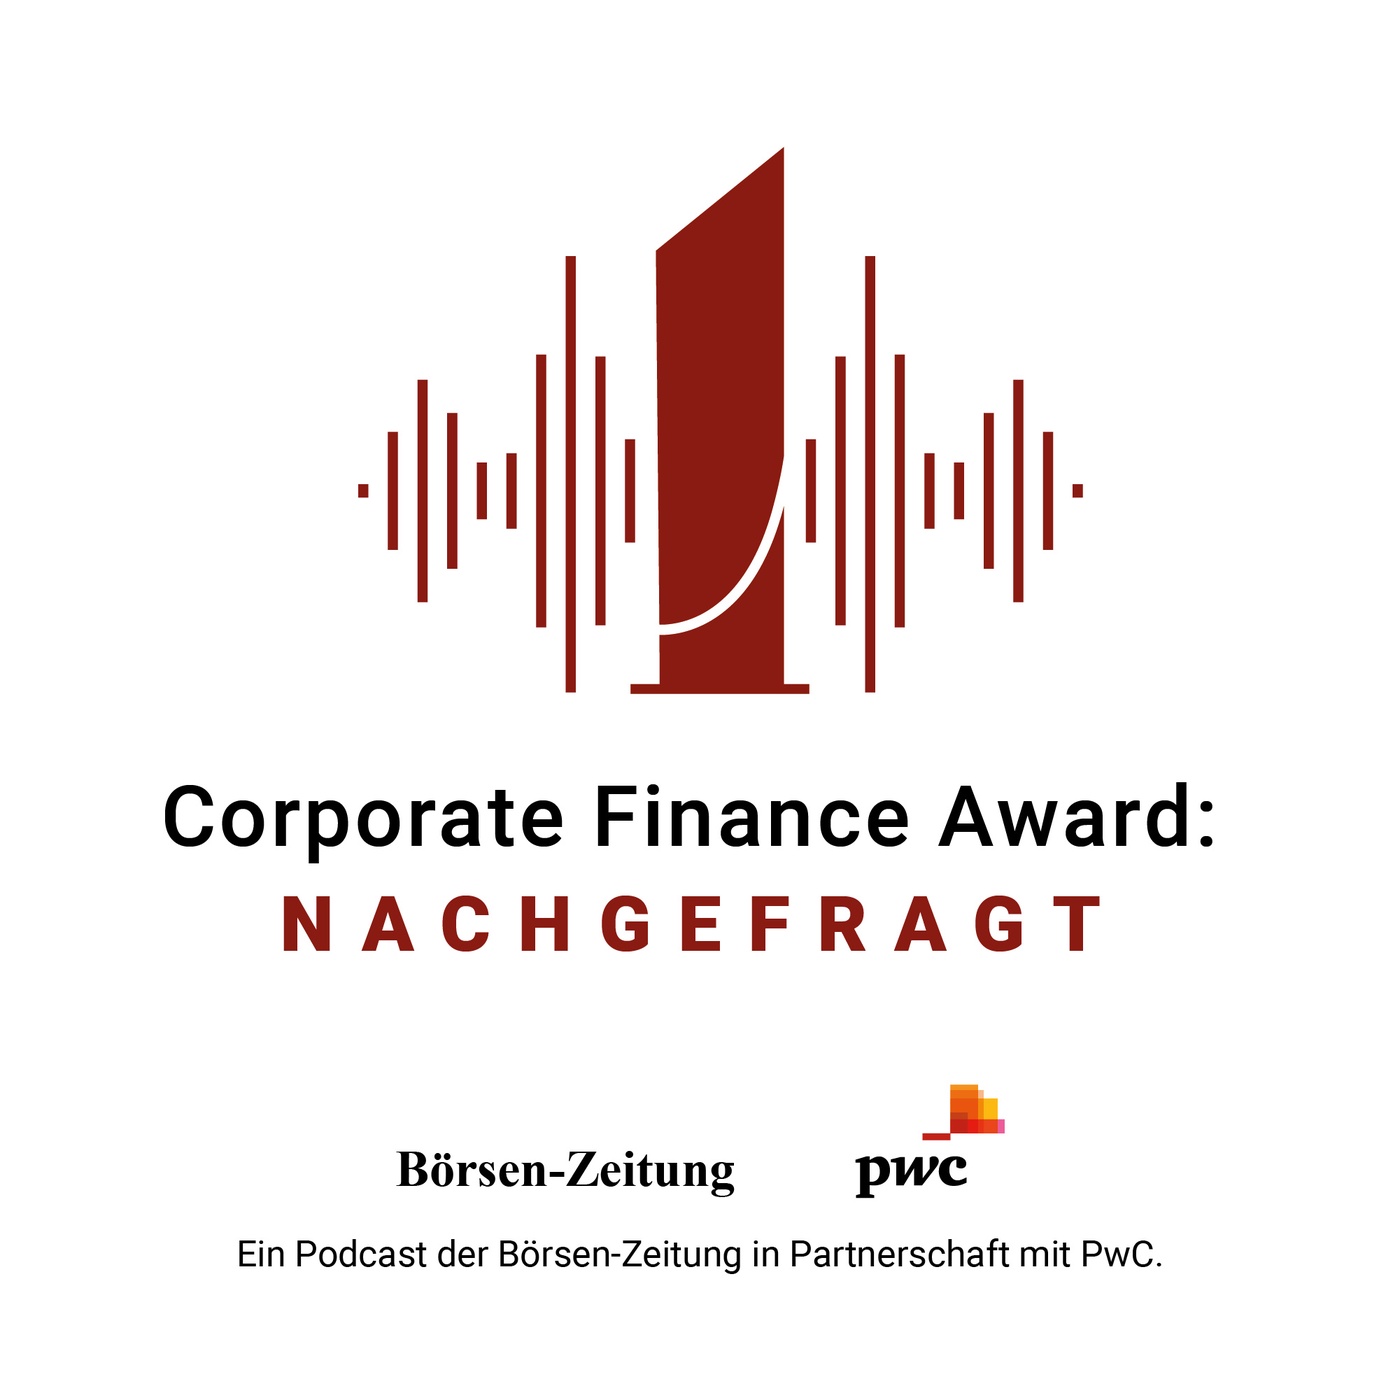 Preisträger 2021 – Debt: CFO Michael Pontzen, Lanxess